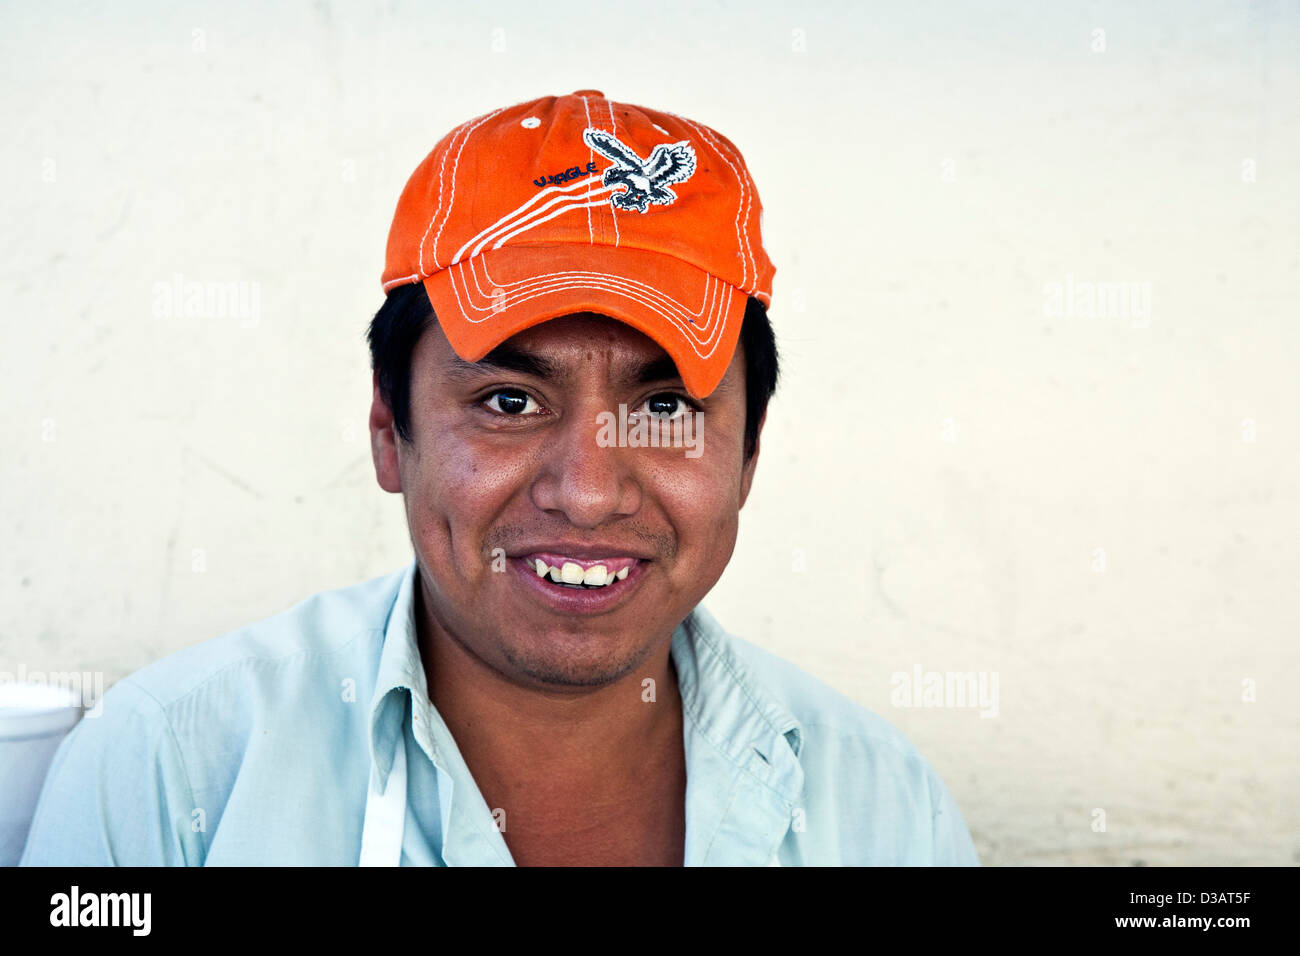 happy-smiling-young-mexican-man-street-vendor-wearing-orange-baseball-D3AT5F.jpg